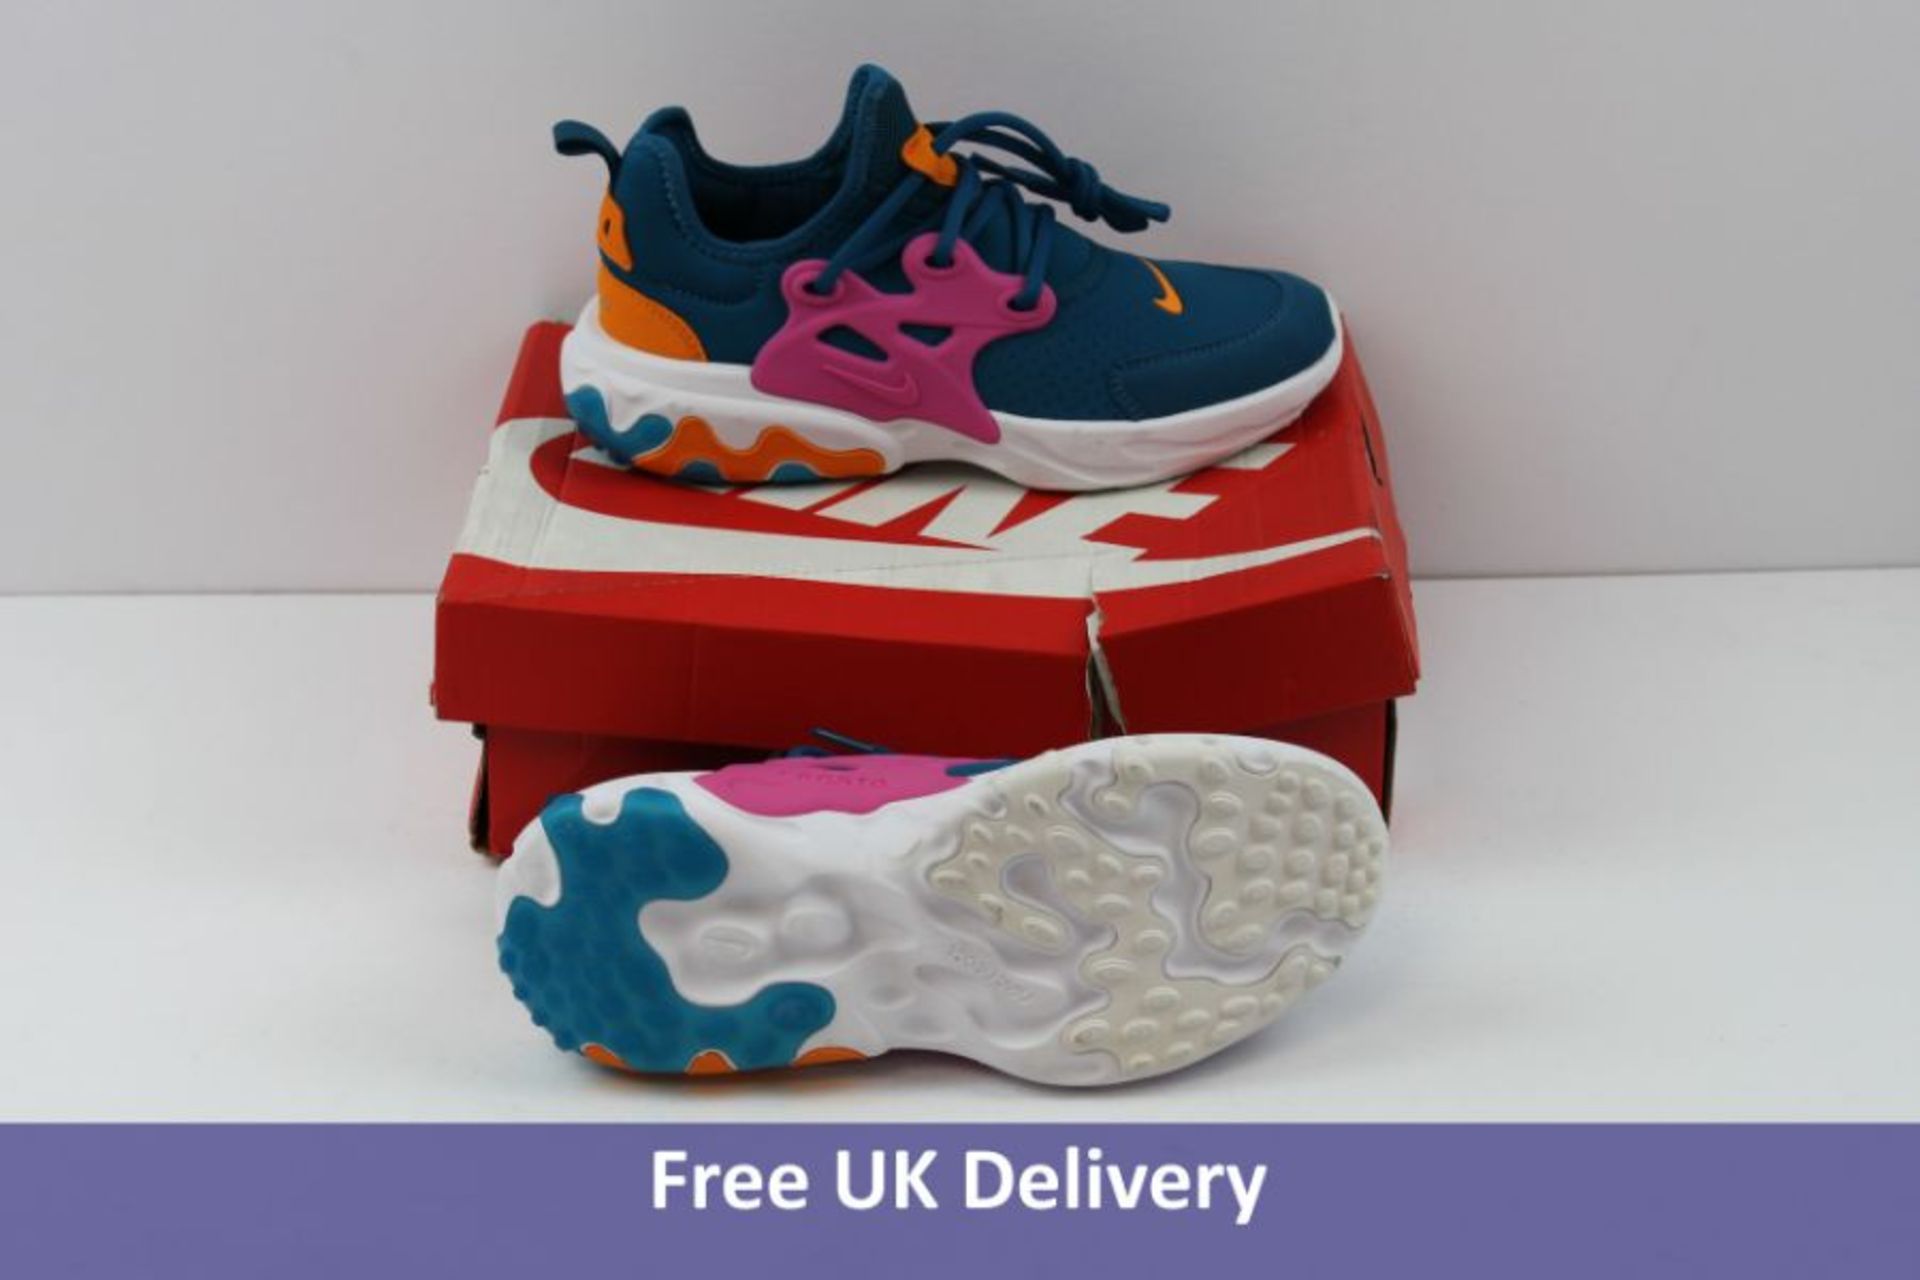 Nike Women's React Presto GS Trainers, Multicoloured, UK 4.5